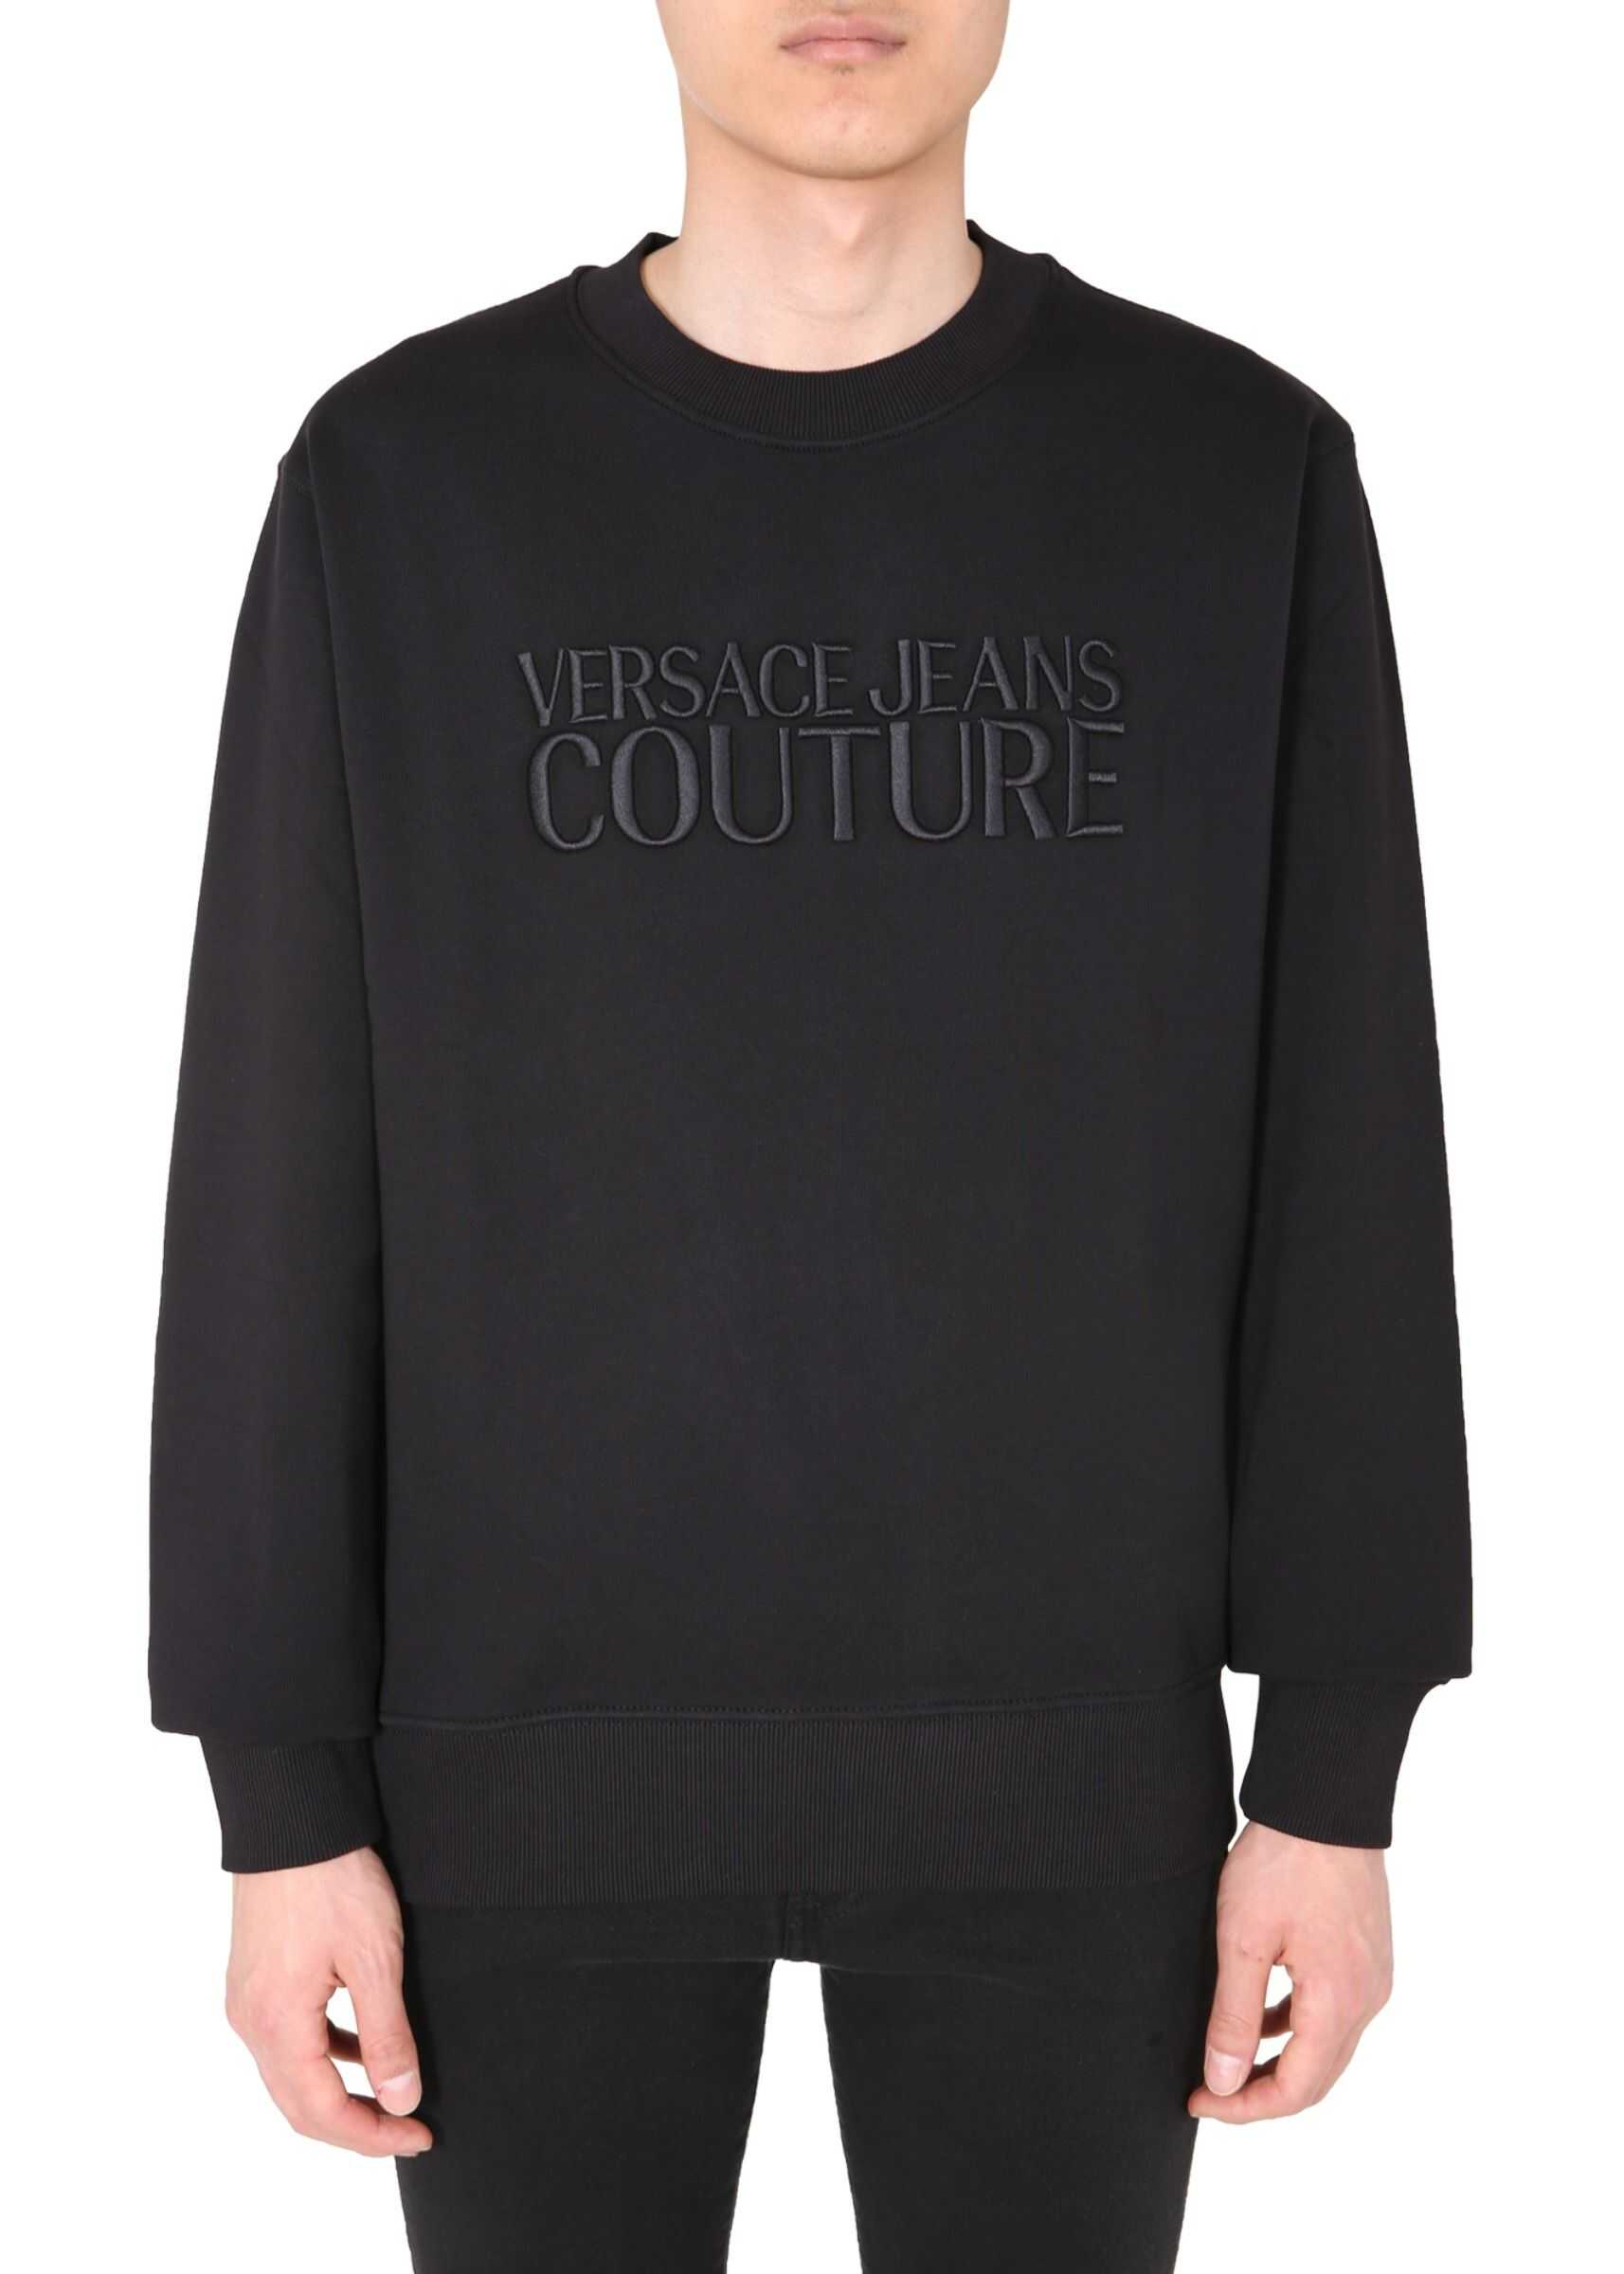 Versace Jeans Couture Round Neck Sweatshirt BLACK